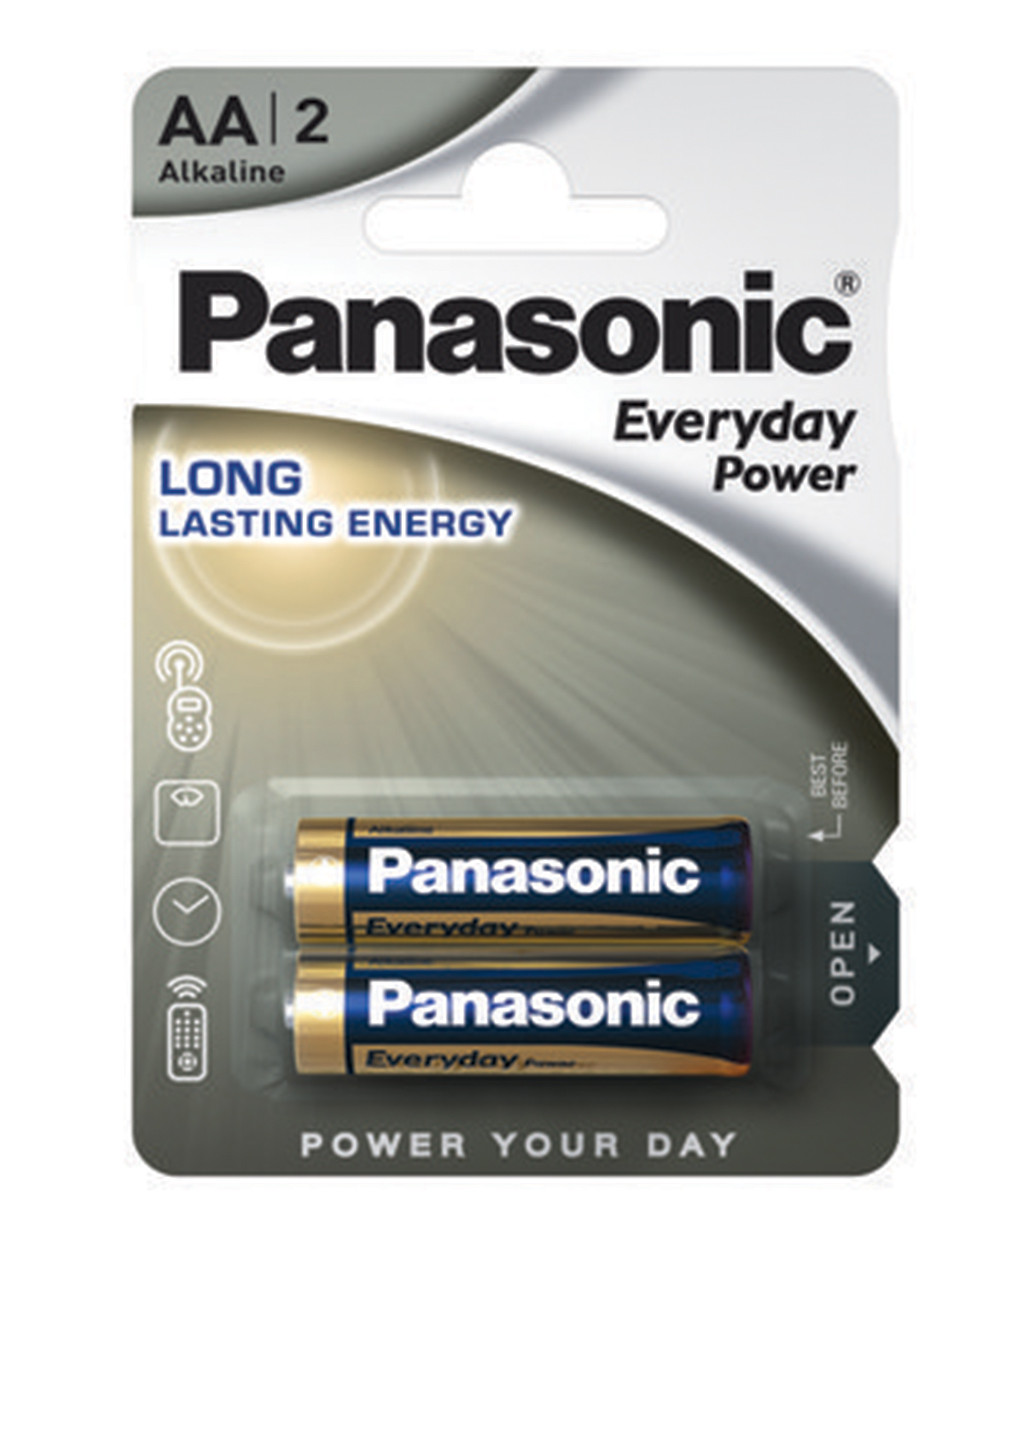 Батарейка EVERYDAY POWER AA BLI 2 ALKALINE (LR6REE / 2BR) Panasonic everyday power aa bli 2 alkaline (lr6ree/2br) (138004308)